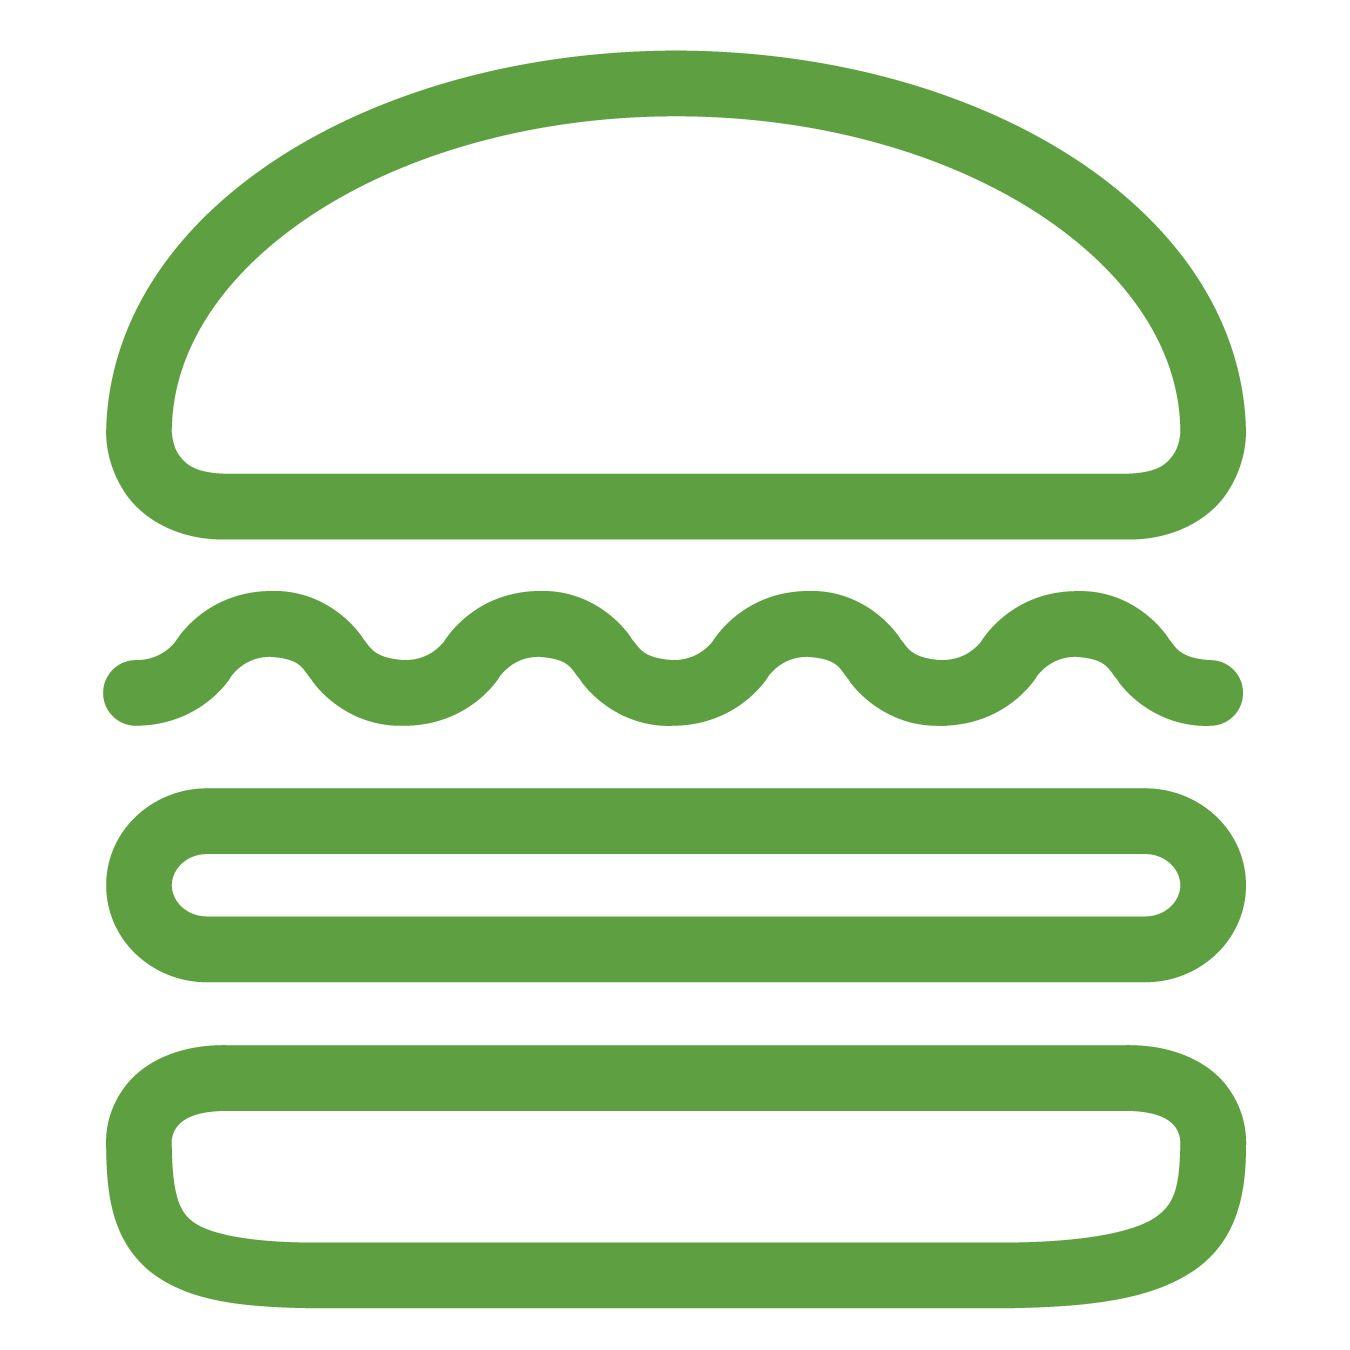 Greenburger Logo - EDGAR Filing Documents for 0001620533-15-000038